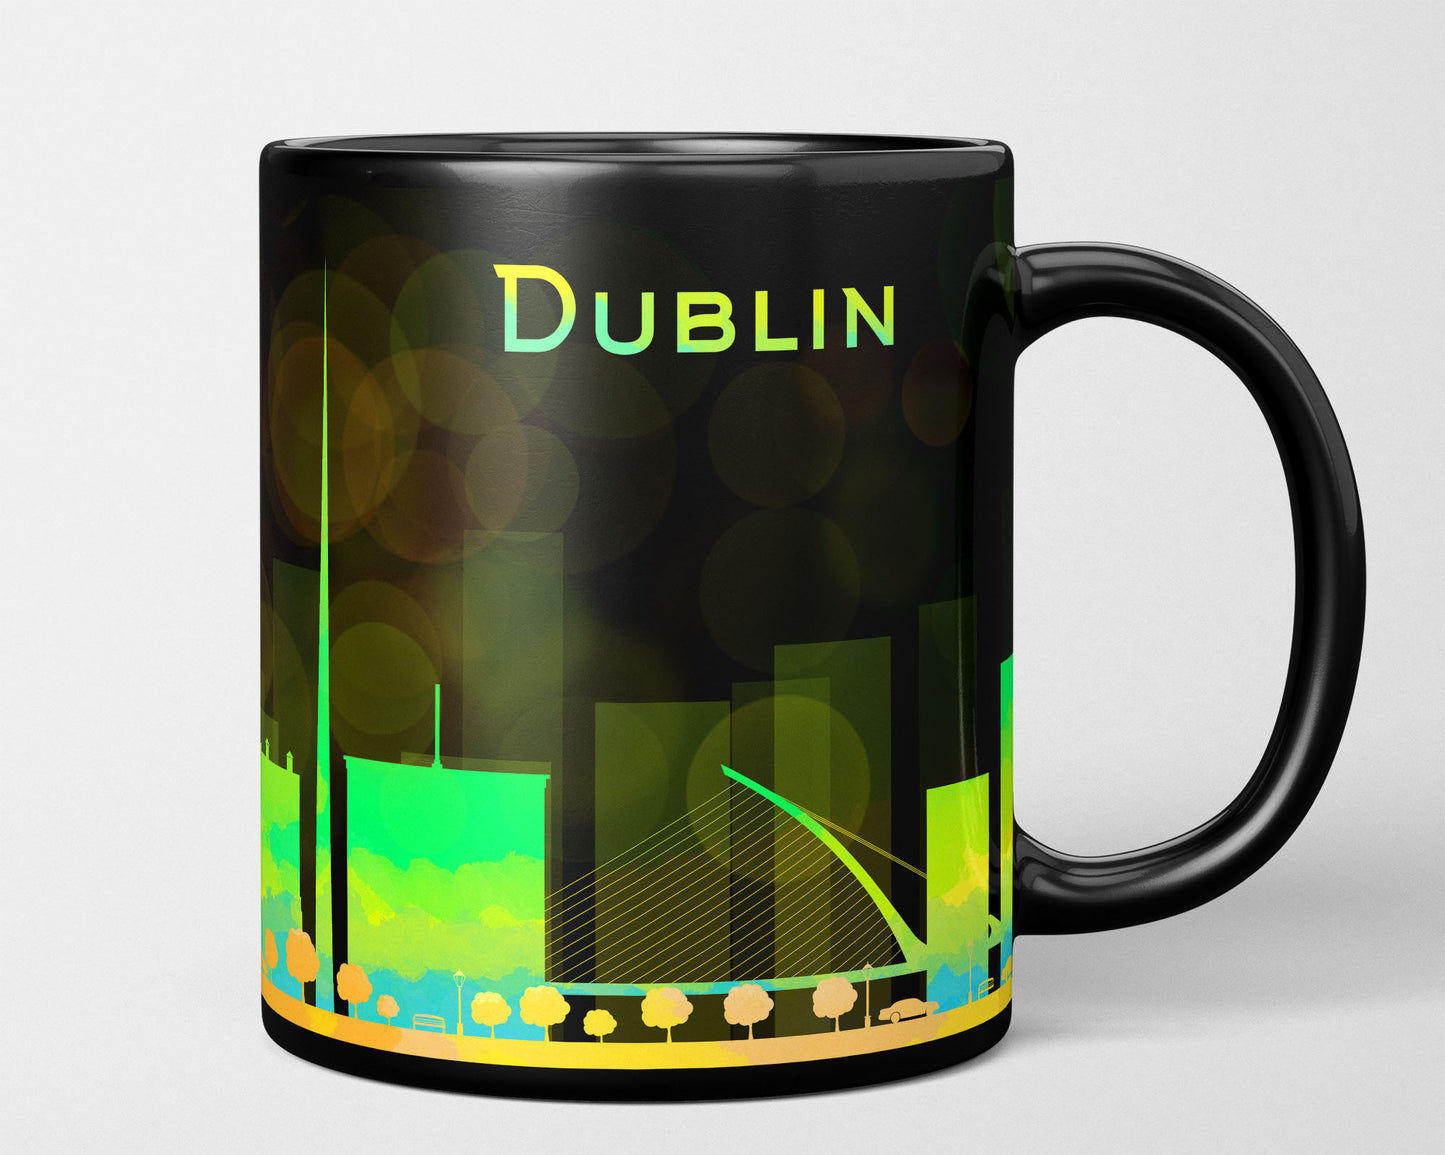 Dublin art mug